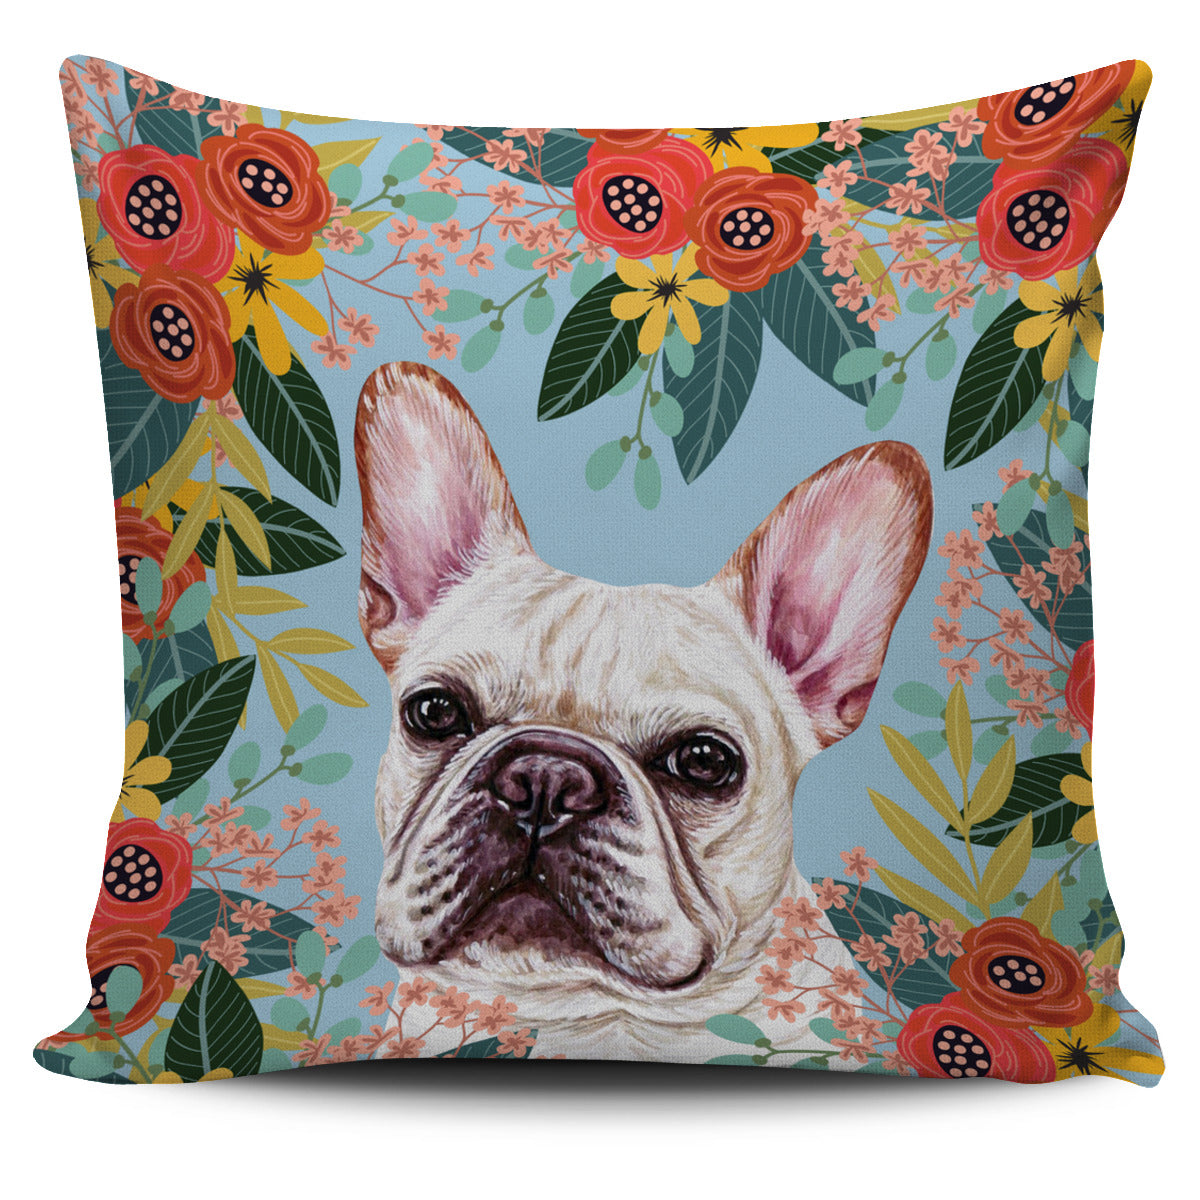 Joyful French Bulldog Pillow Cover